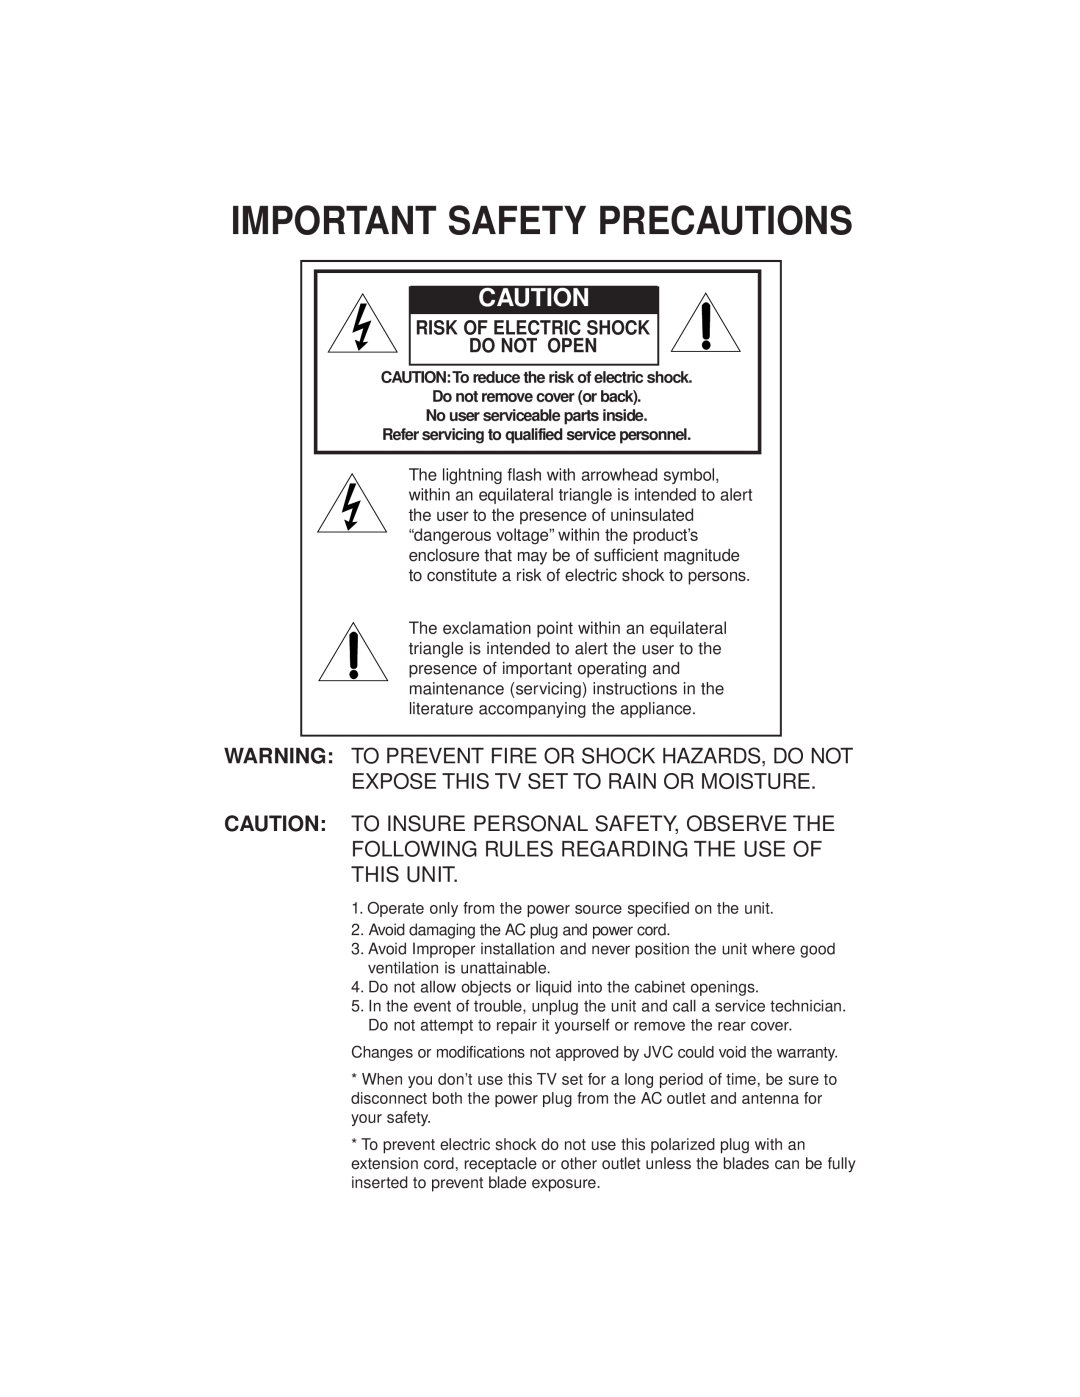 JVC AV-27GFH manual Important Safety Precautions, Risk Of Electric Shock Do Not Open 